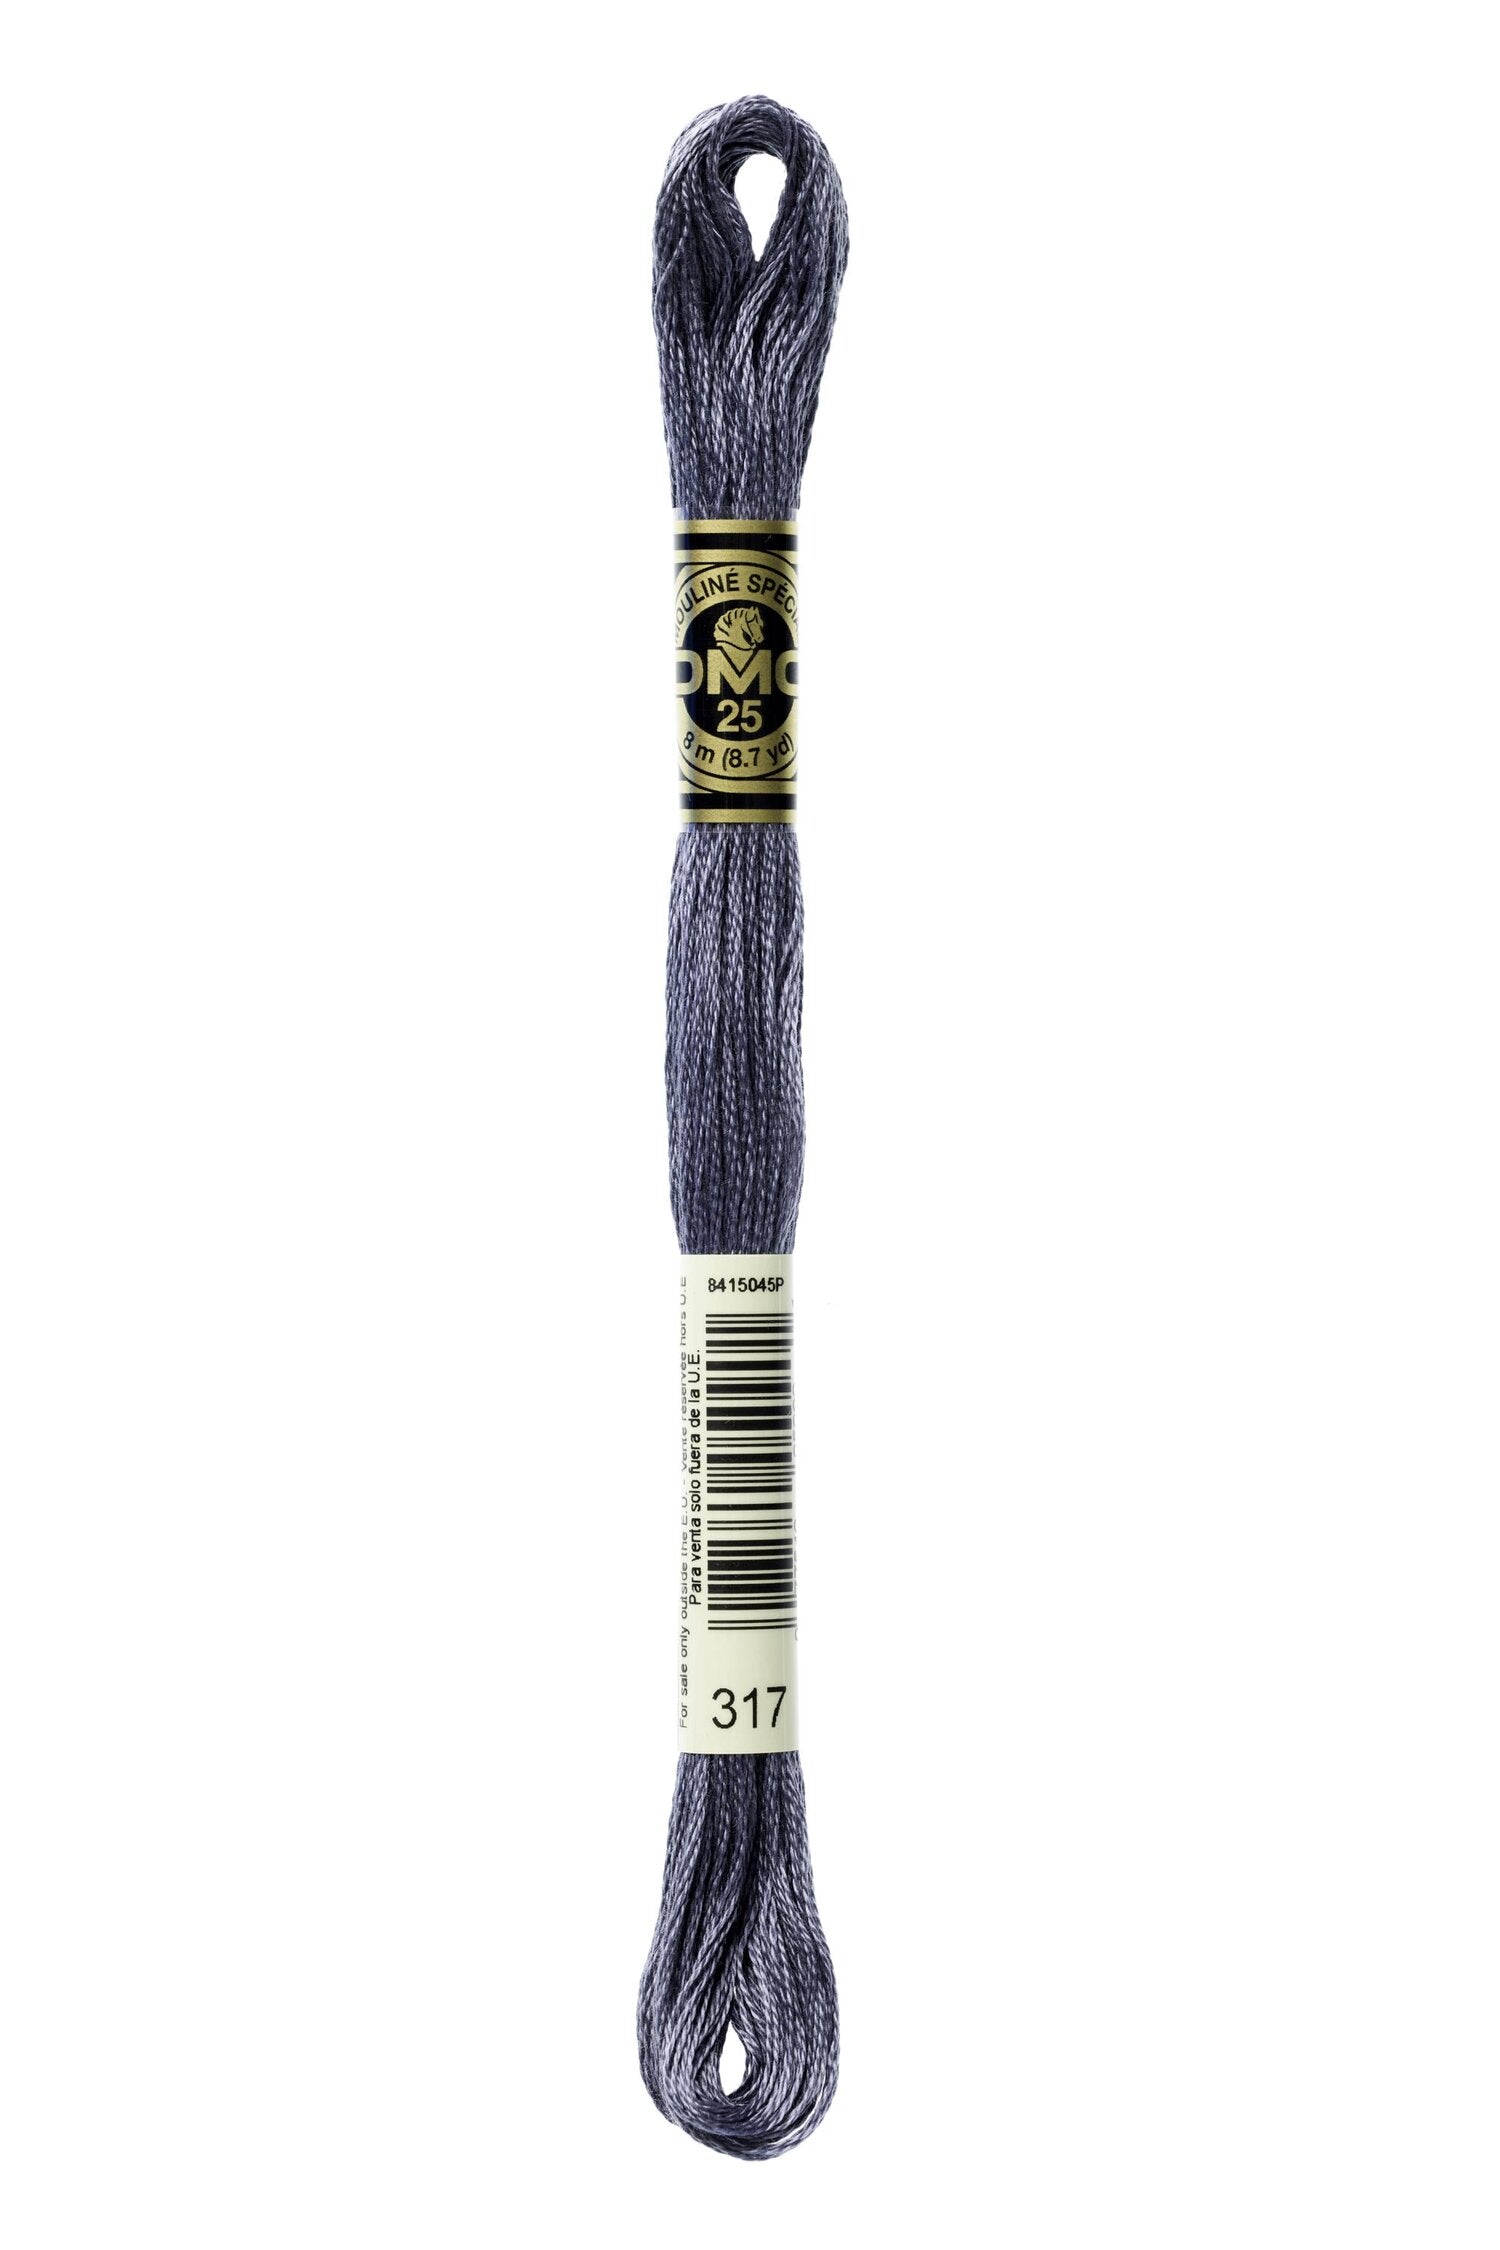 DMC 317 - Pewter Gray - DMC 6 Strand Embroidery Thread, Thread & Floss, Thread & Floss, The Crafty Grimalkin - A Cross Stitch Store